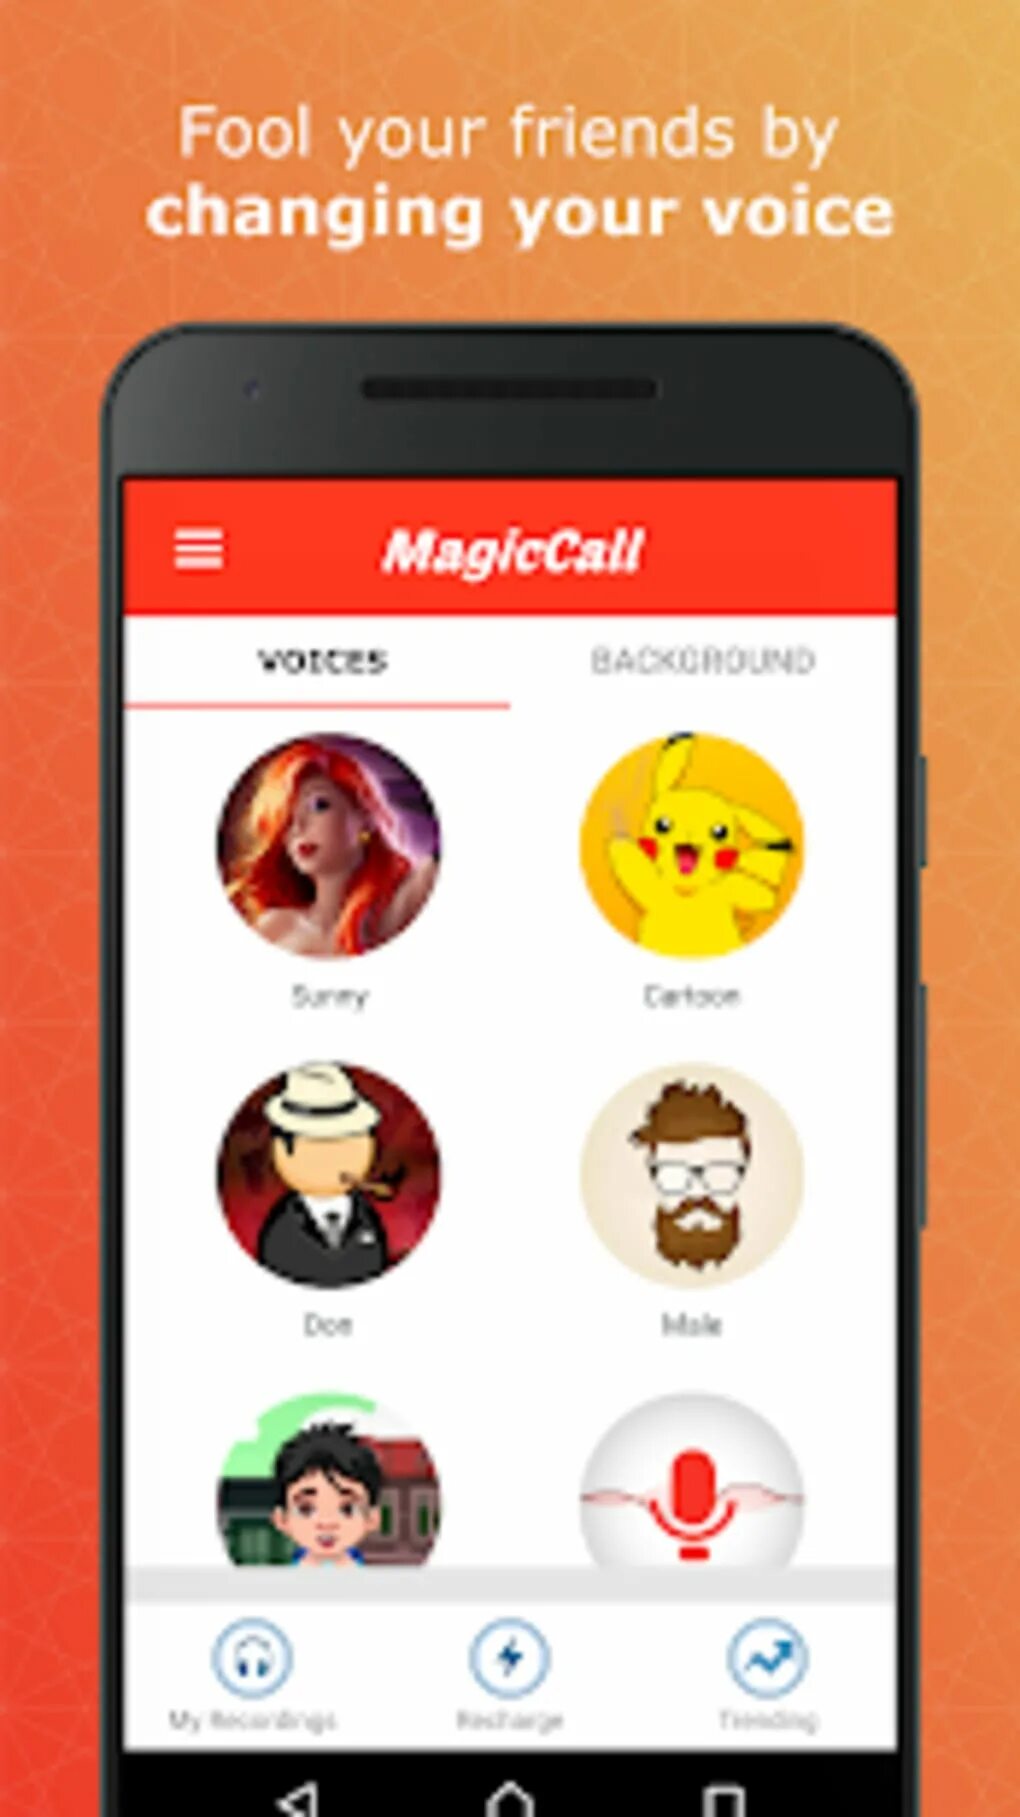 Magiccall. MAGICCALL Voice Changer app. ПРАНК изменение голоса. Voice. App приложение для общения. Изменение голоса в реальном времени на андроид.